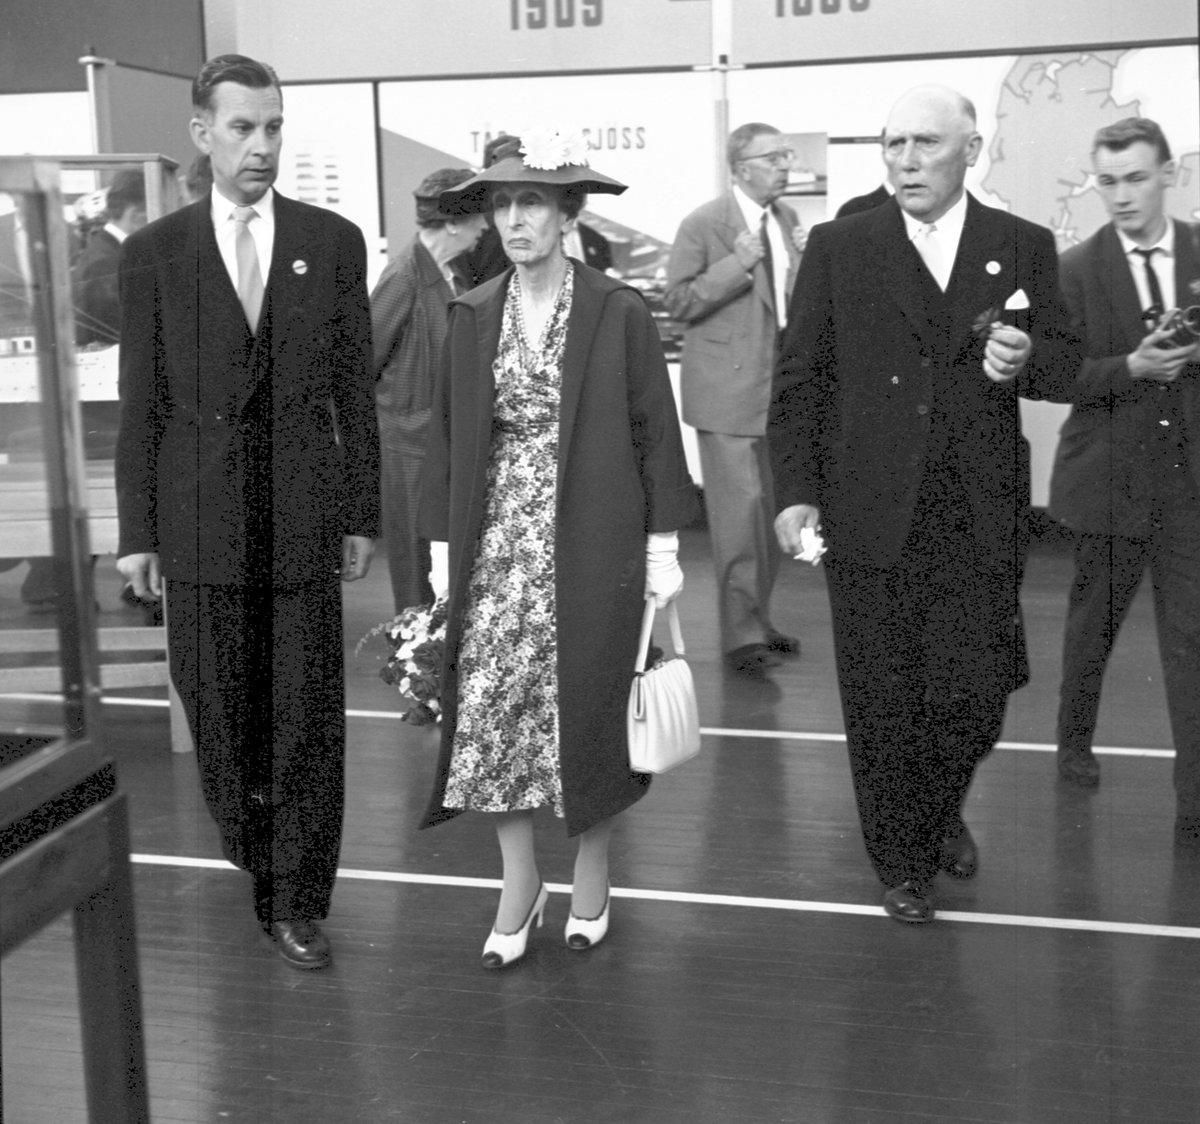 Kungaparet besöker M/S Trelleborgs utställning
Drottning Louise Mountbatten